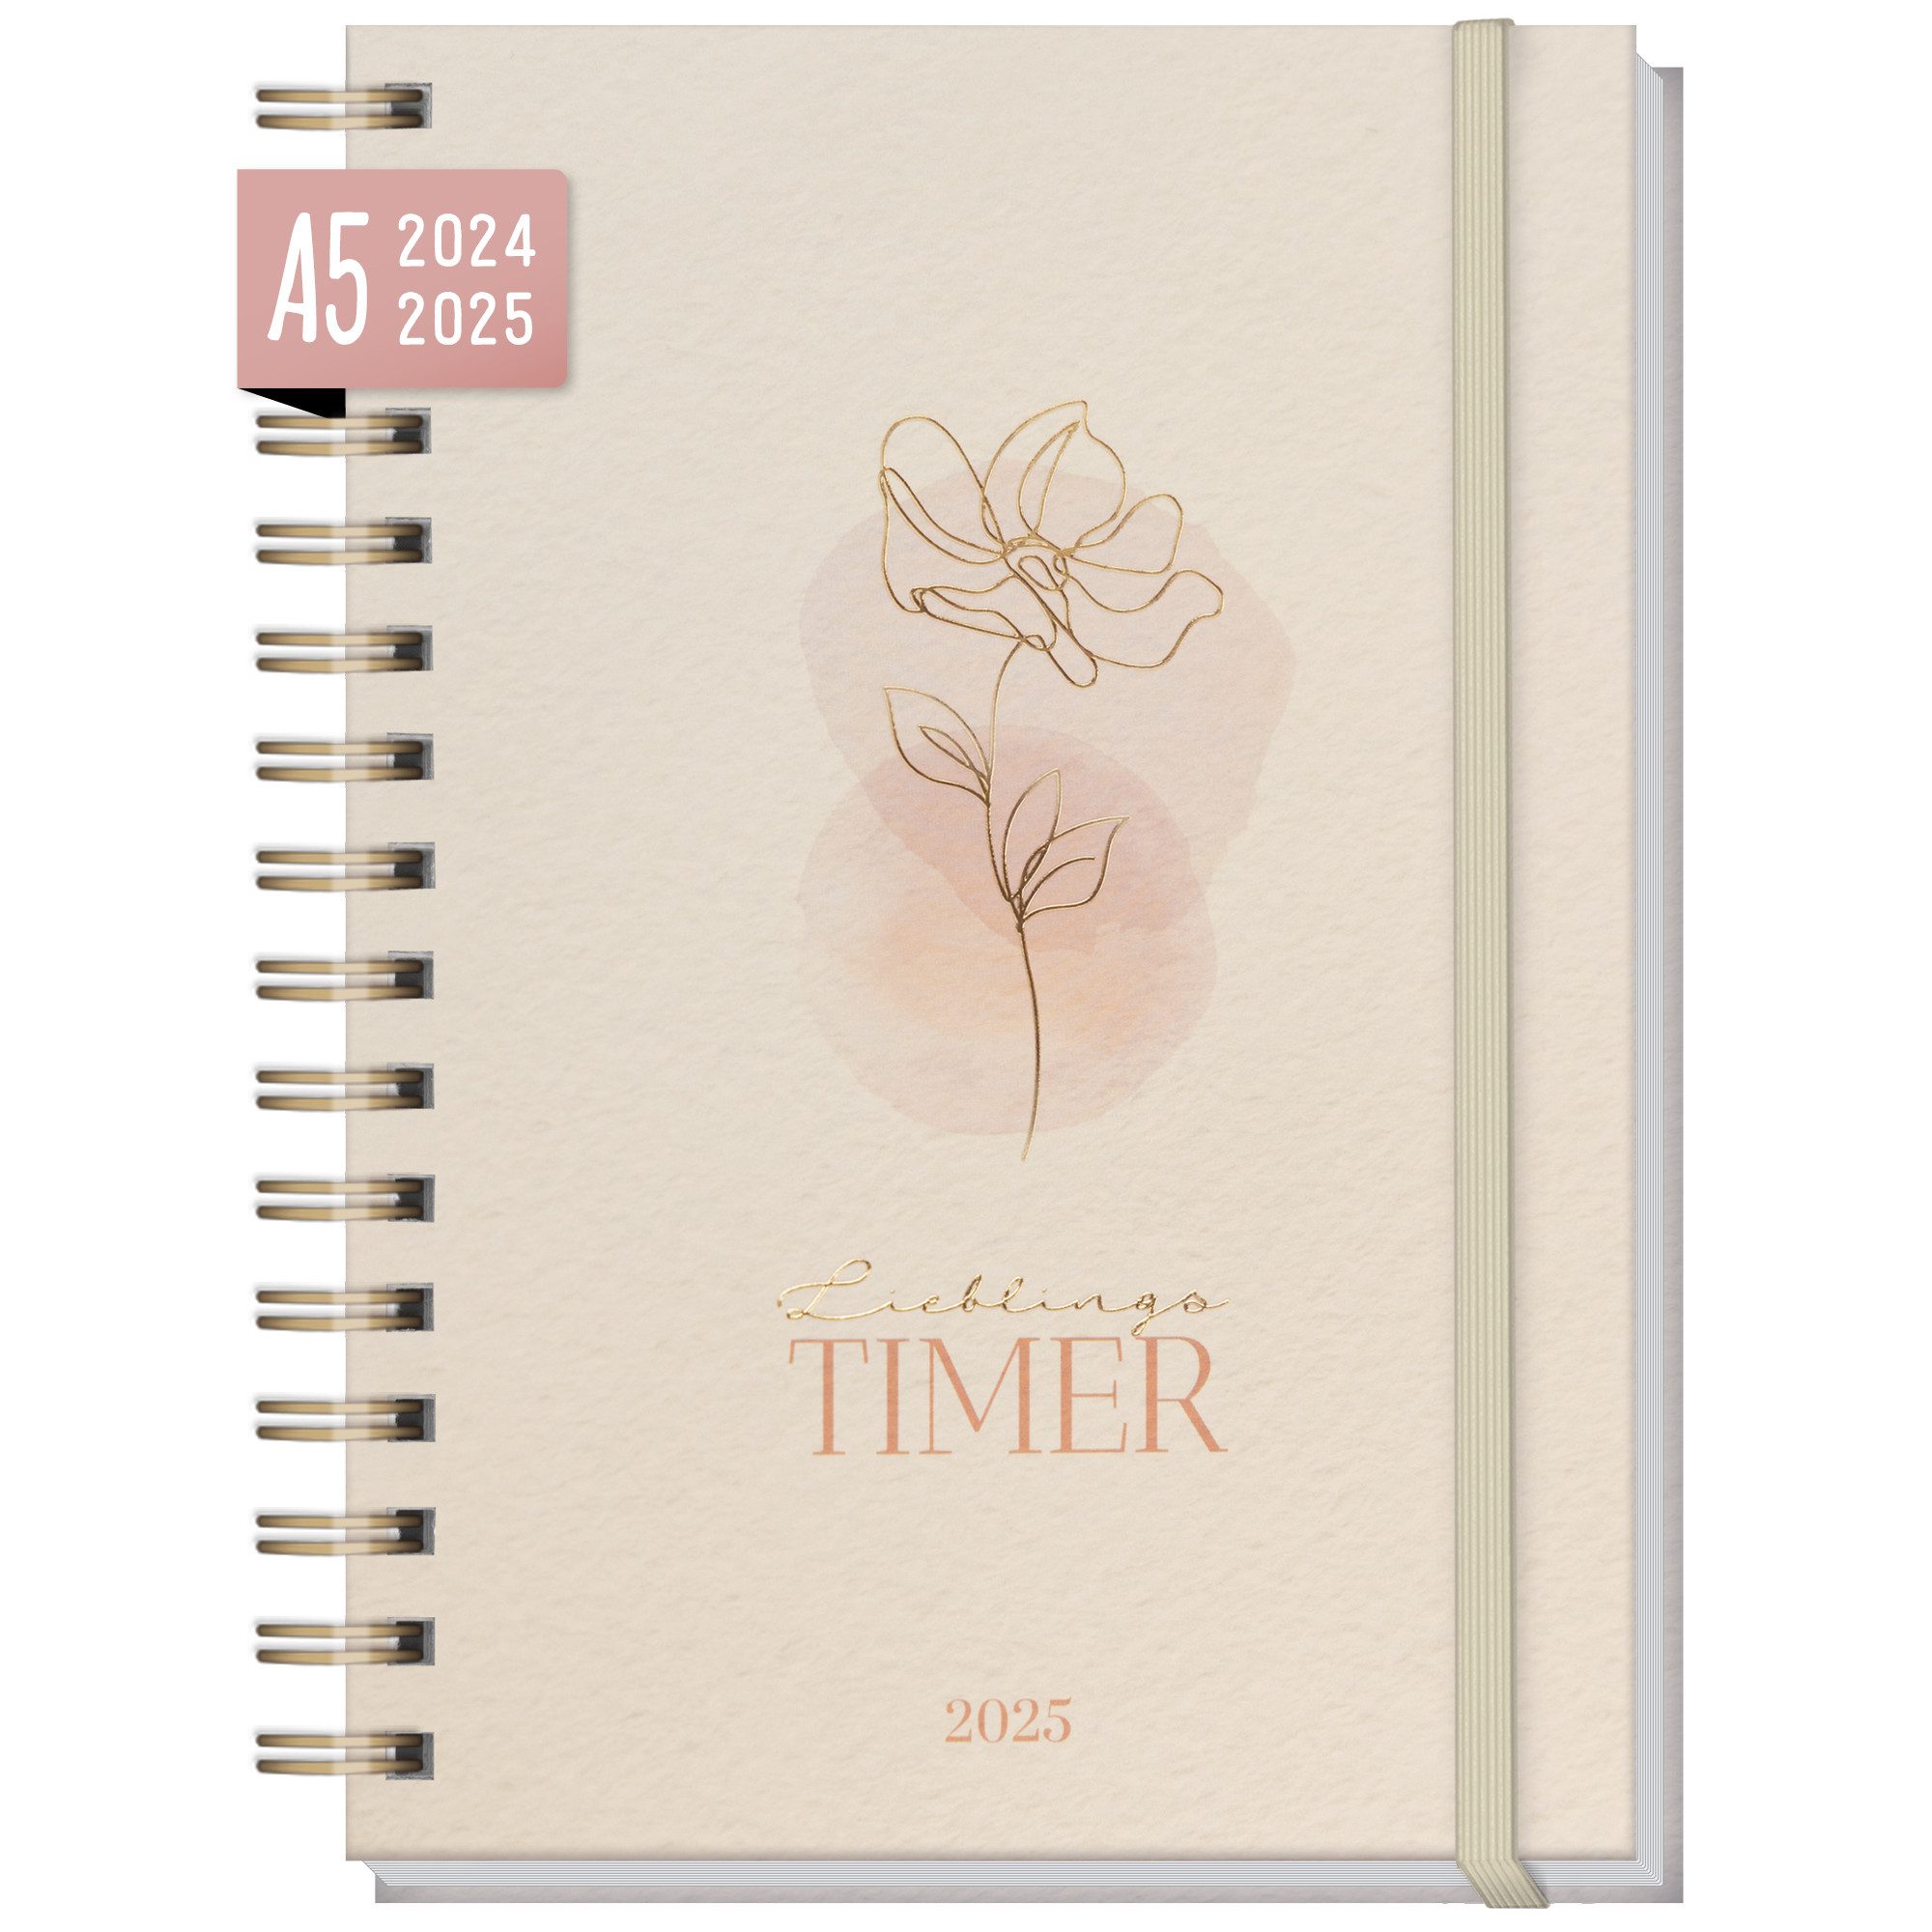 Häfft Terminkalender Lieblings-Timer 2024/2025 - 18 Monate